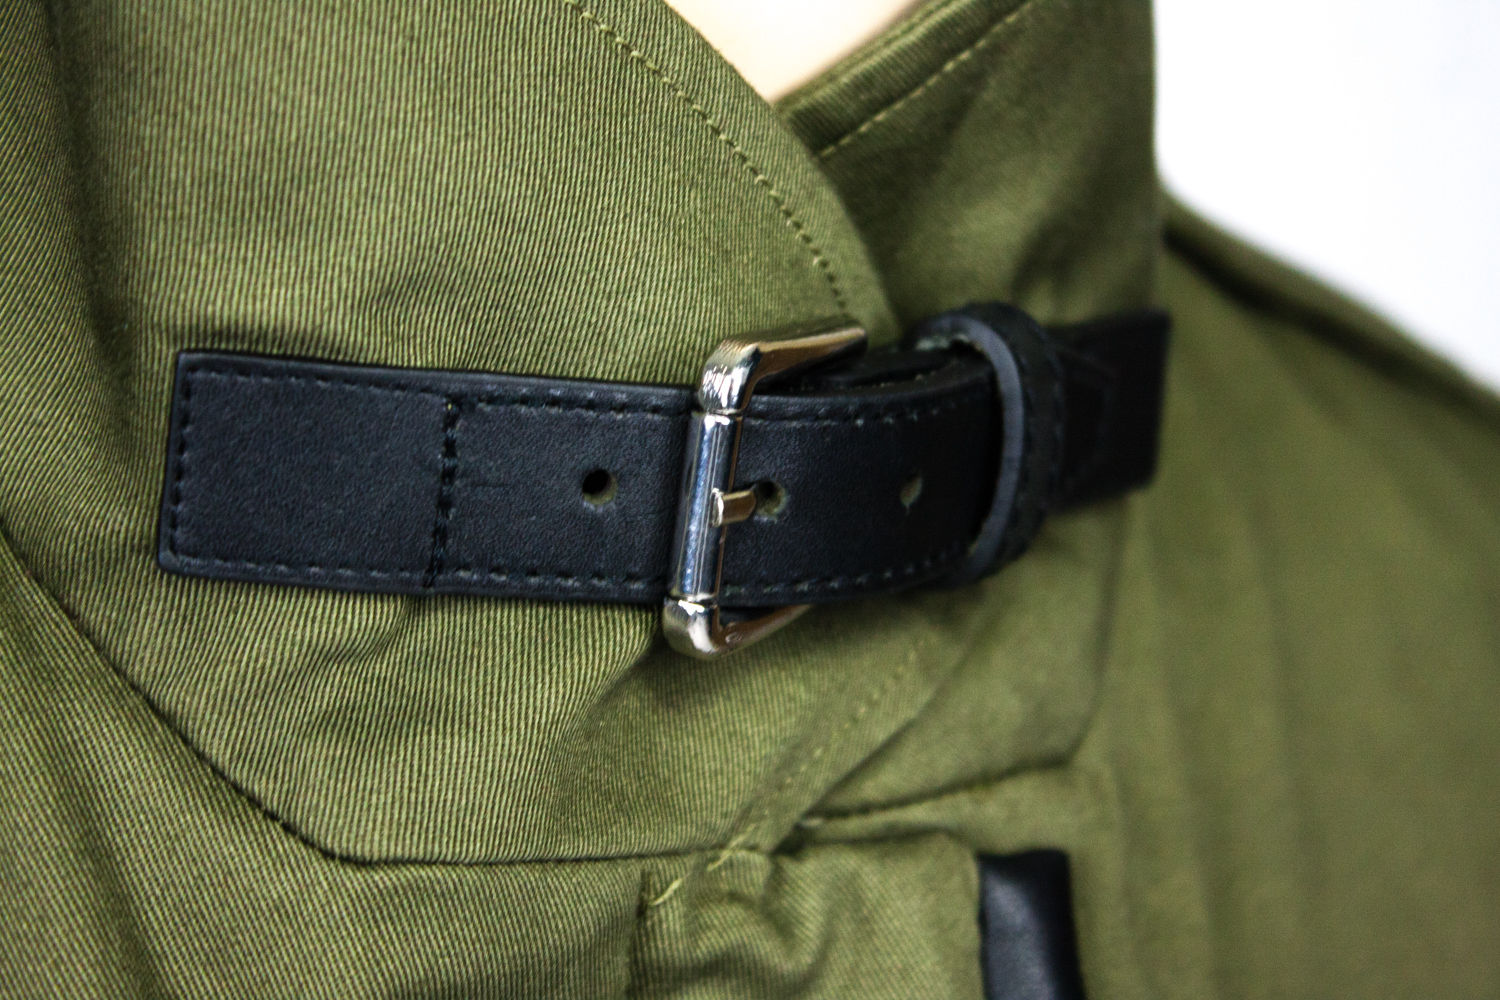 MAJE Military Style Khaki Green Jacket, Size S - secondfirst